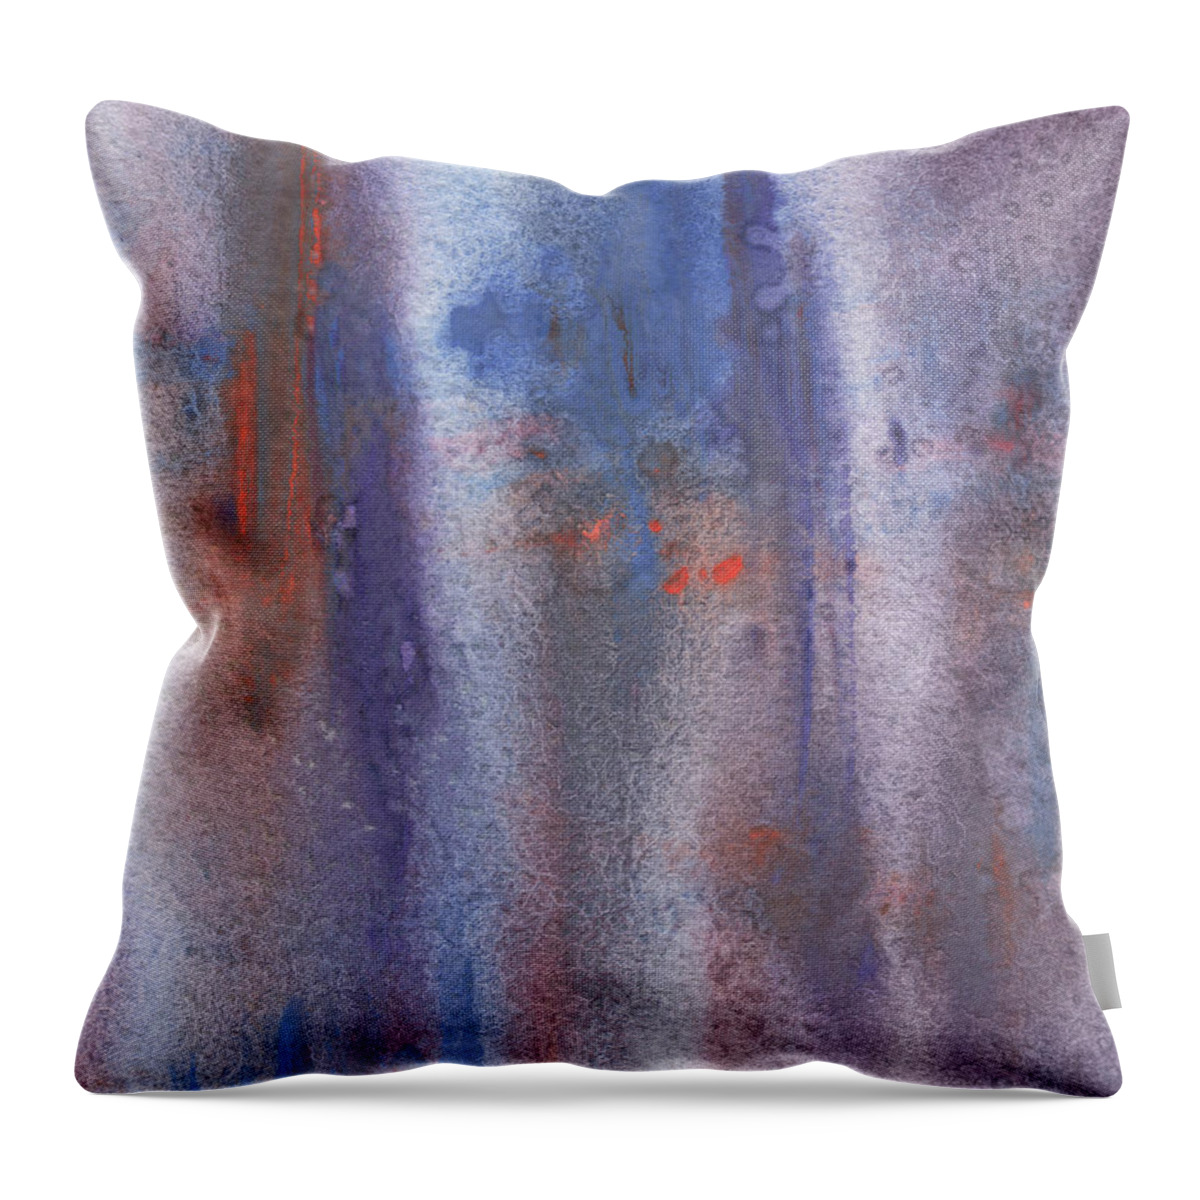 Mist Throw Pillow featuring the painting Purple Foggy Mist Abstract Watercolor II by Irina Sztukowski